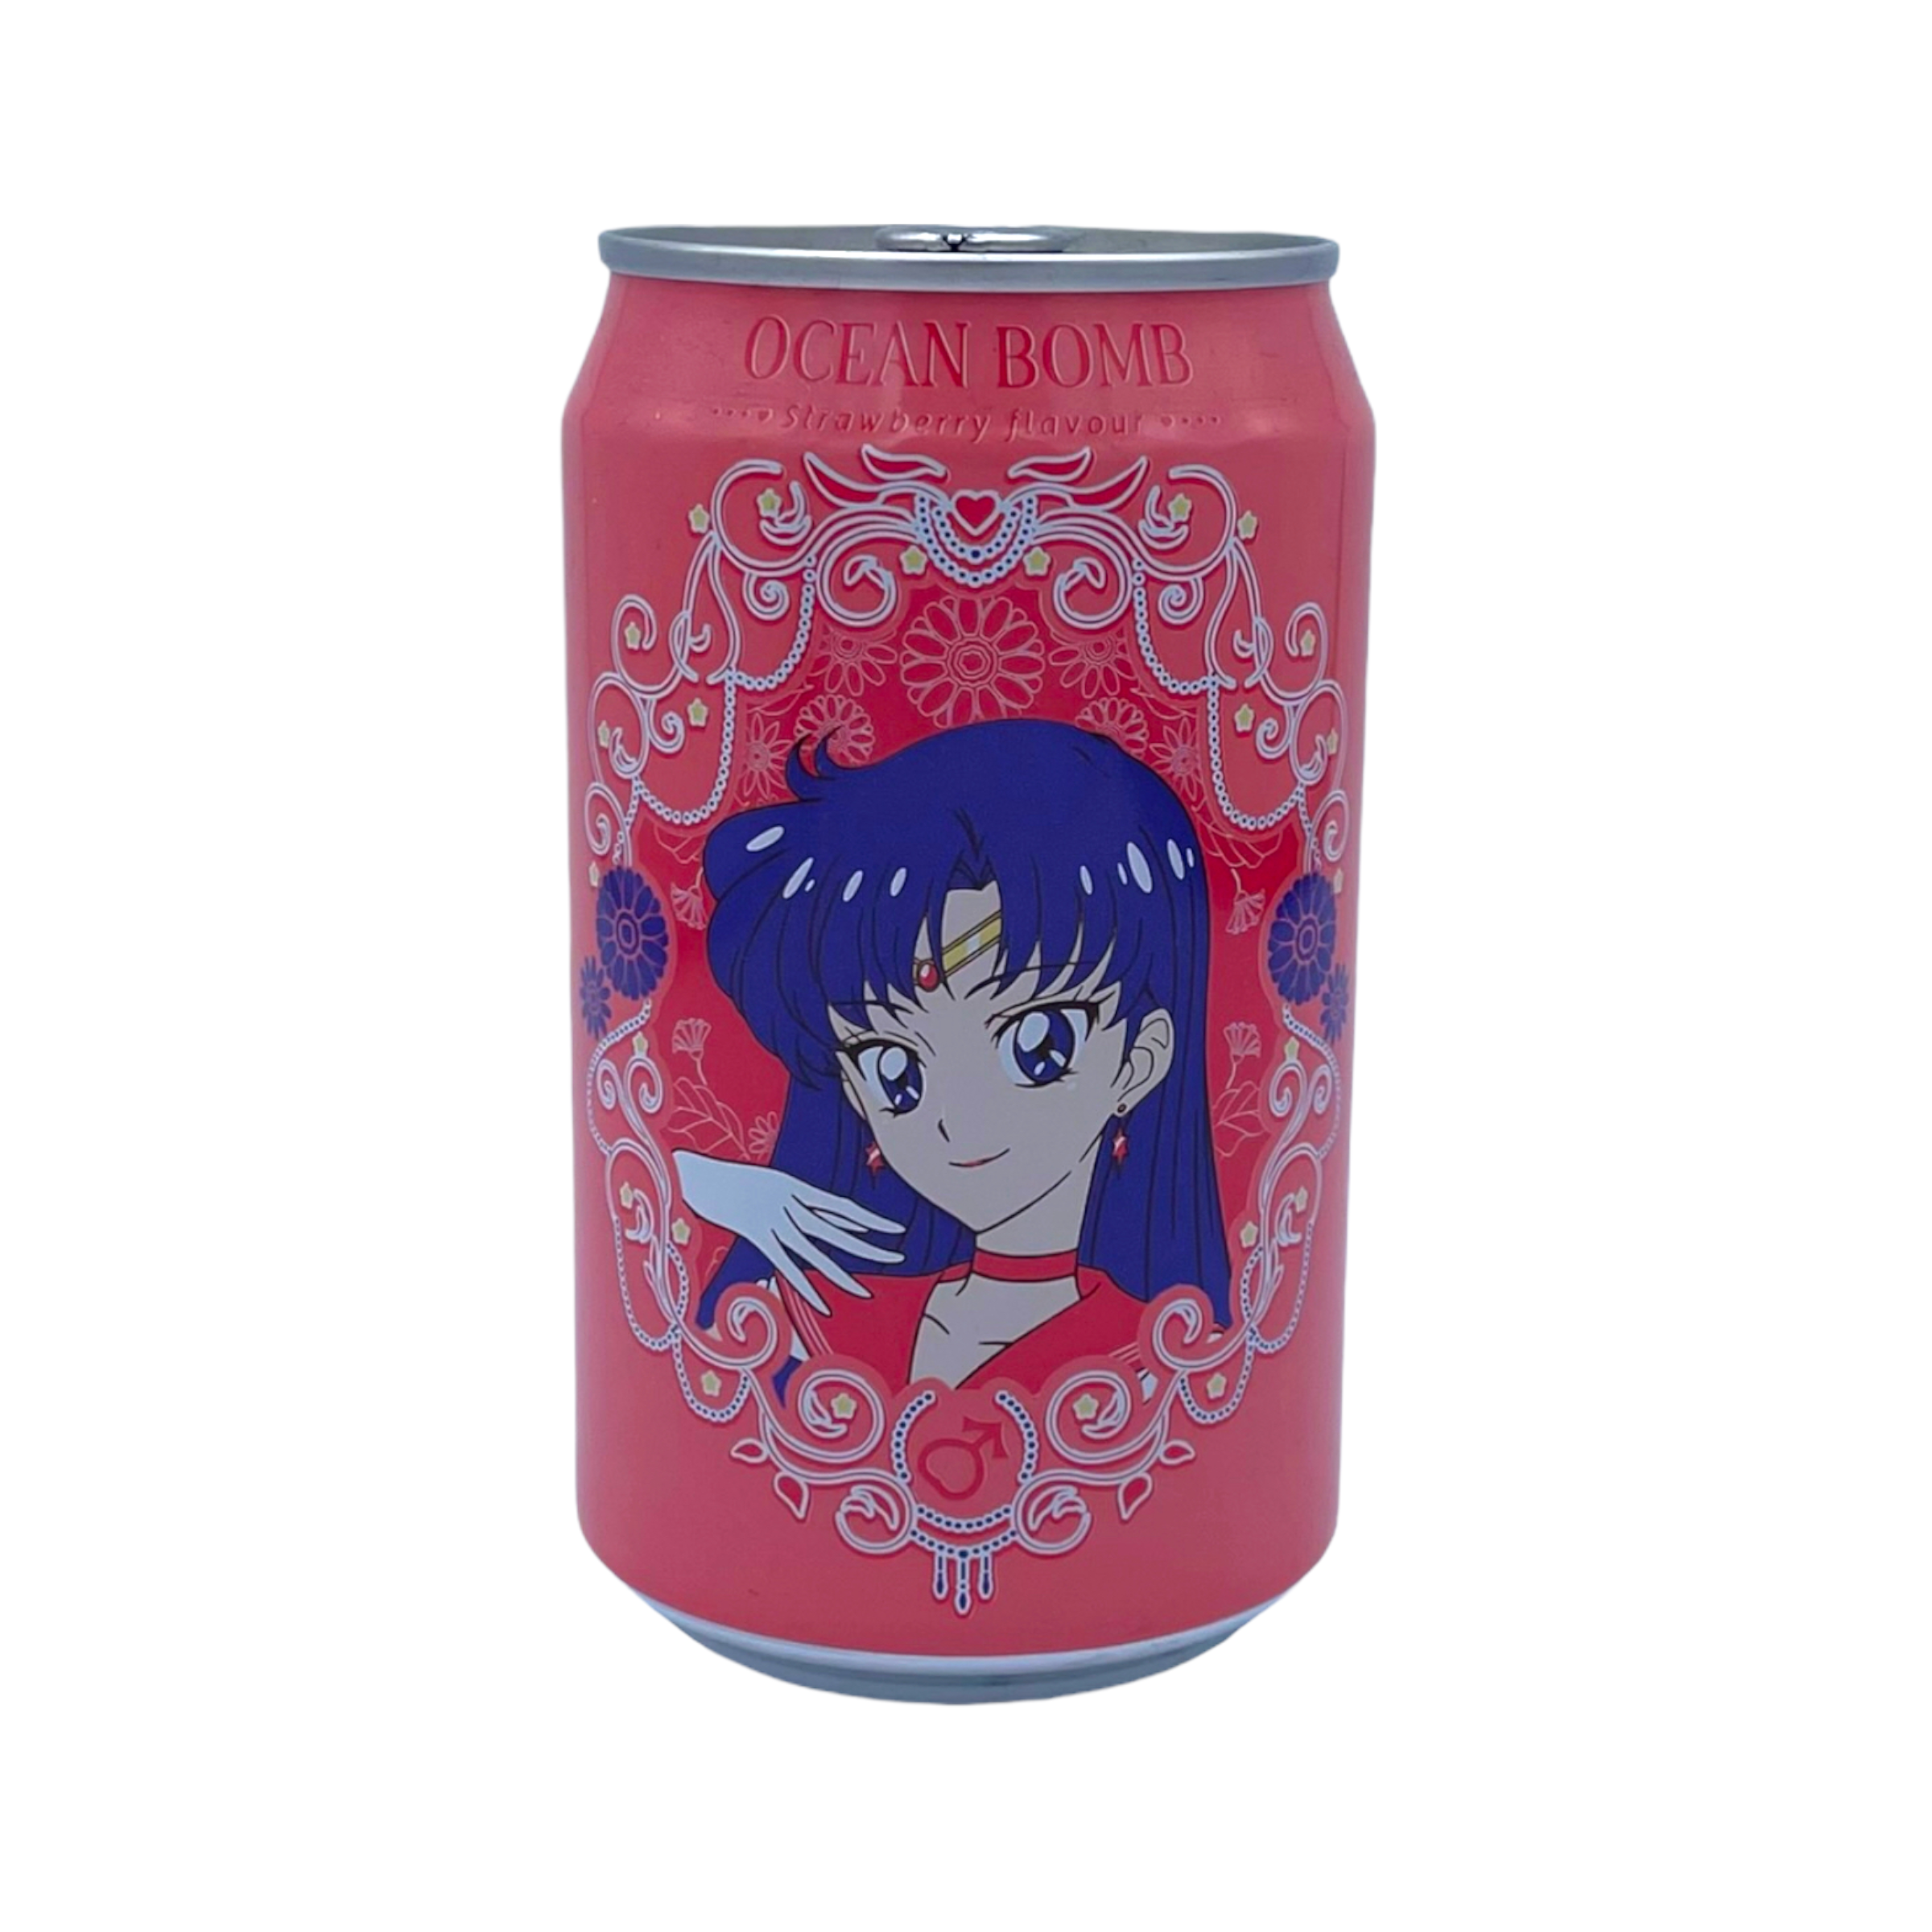 Ocean Bomb Sailor Moon Strawberry Flavour